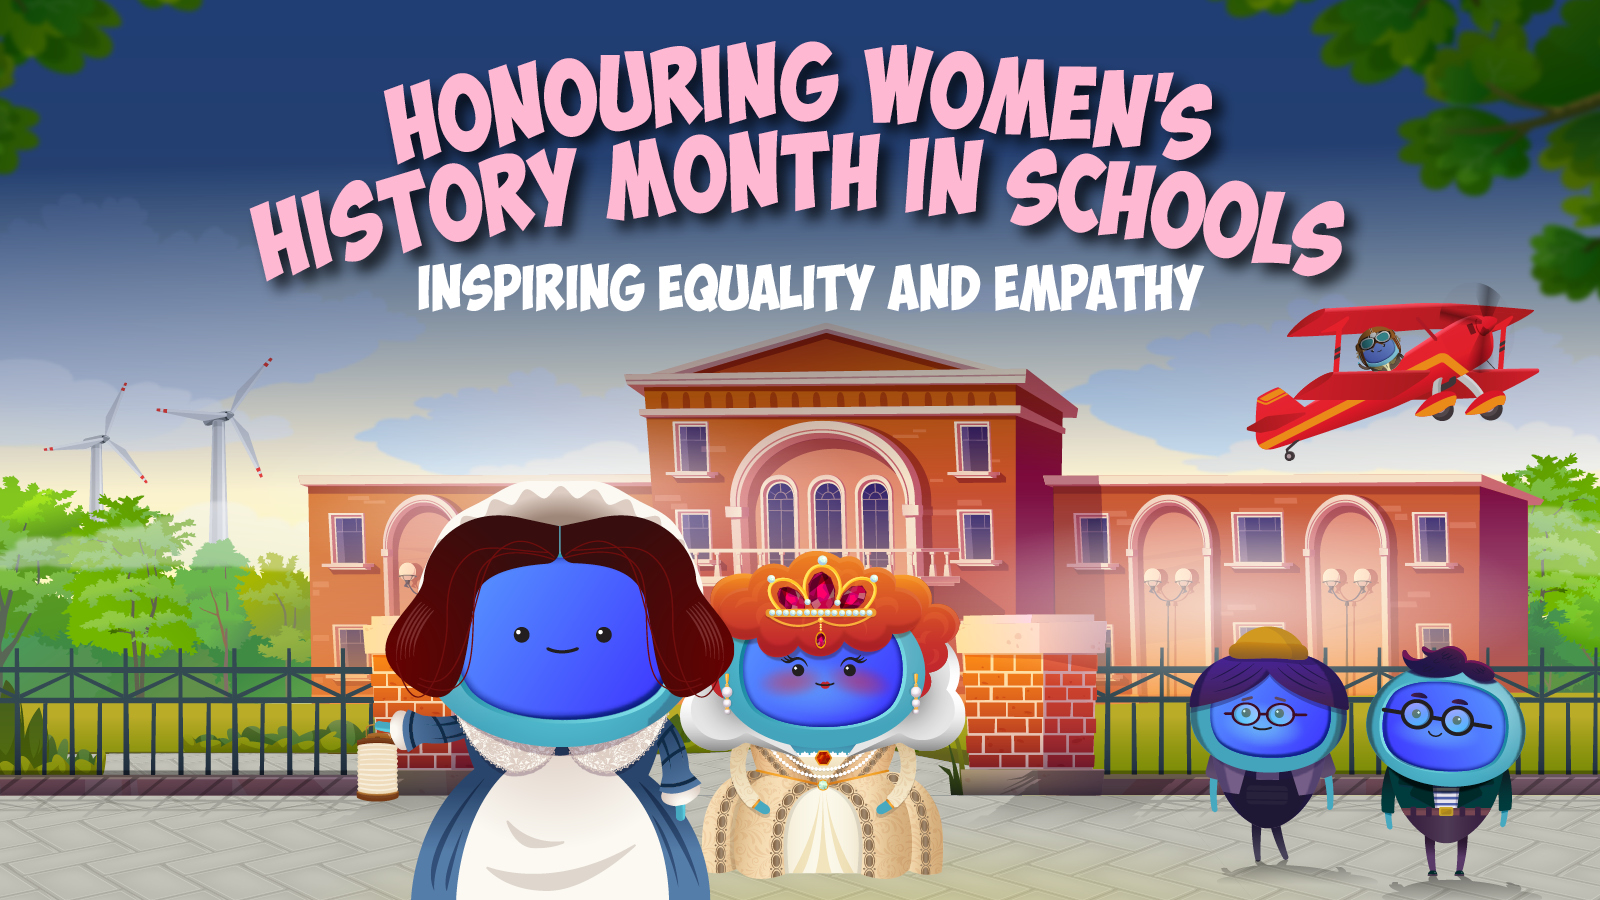 Honouring Women's History Month in Schools